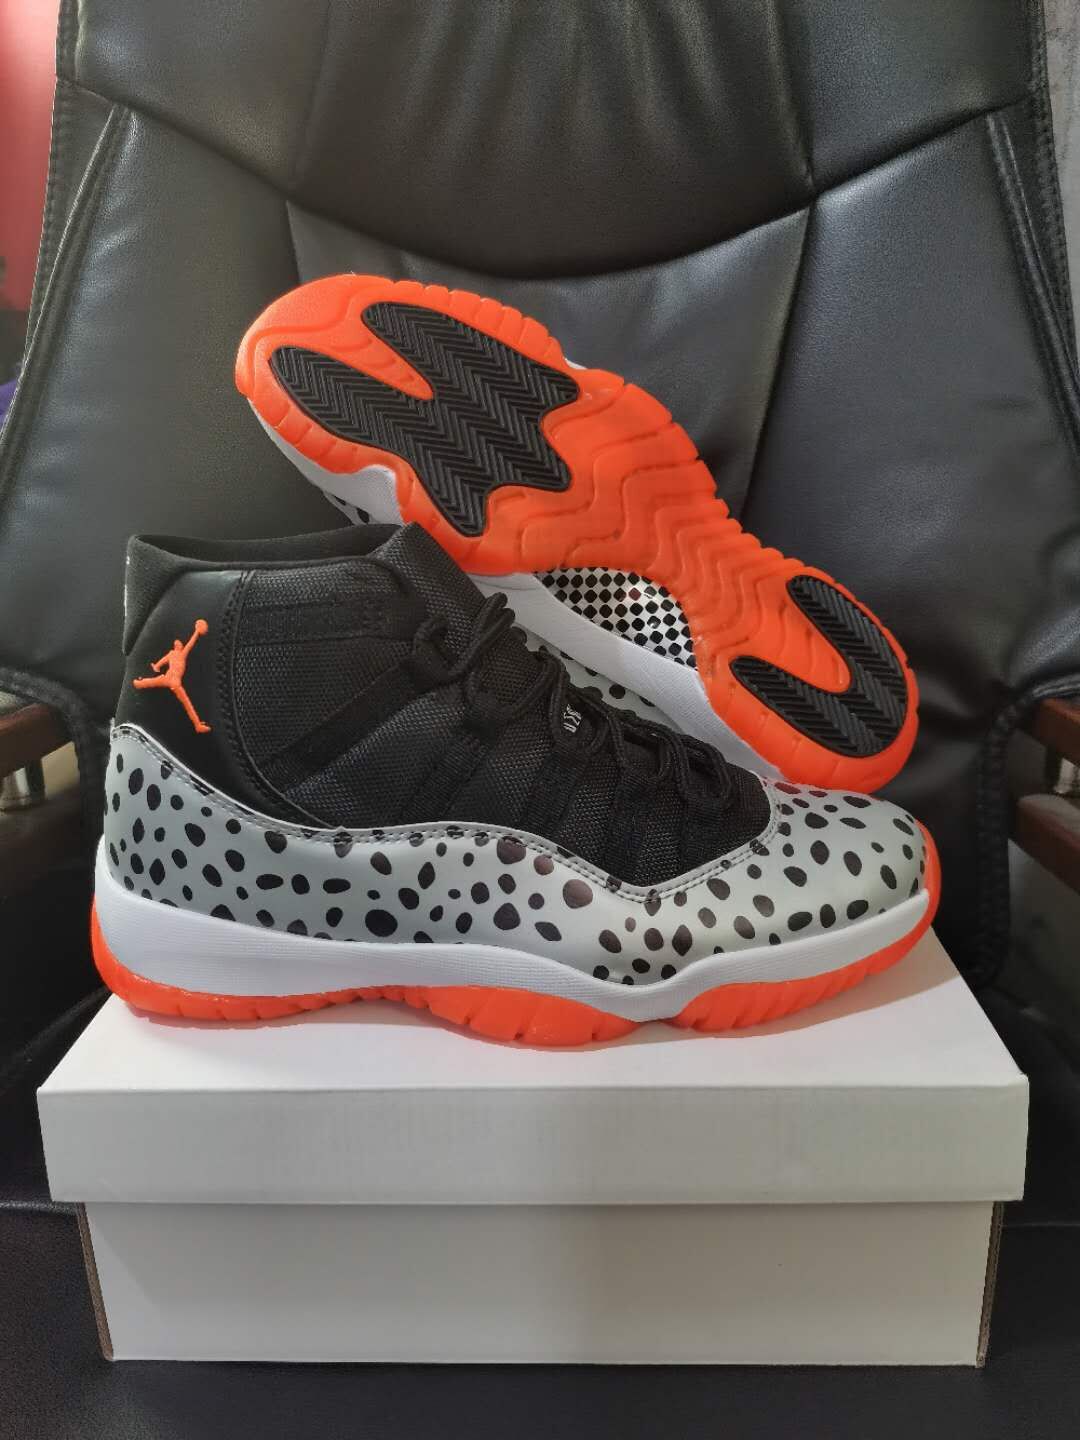 Air Jordan 11 Leopard Print Black Orange Shoes